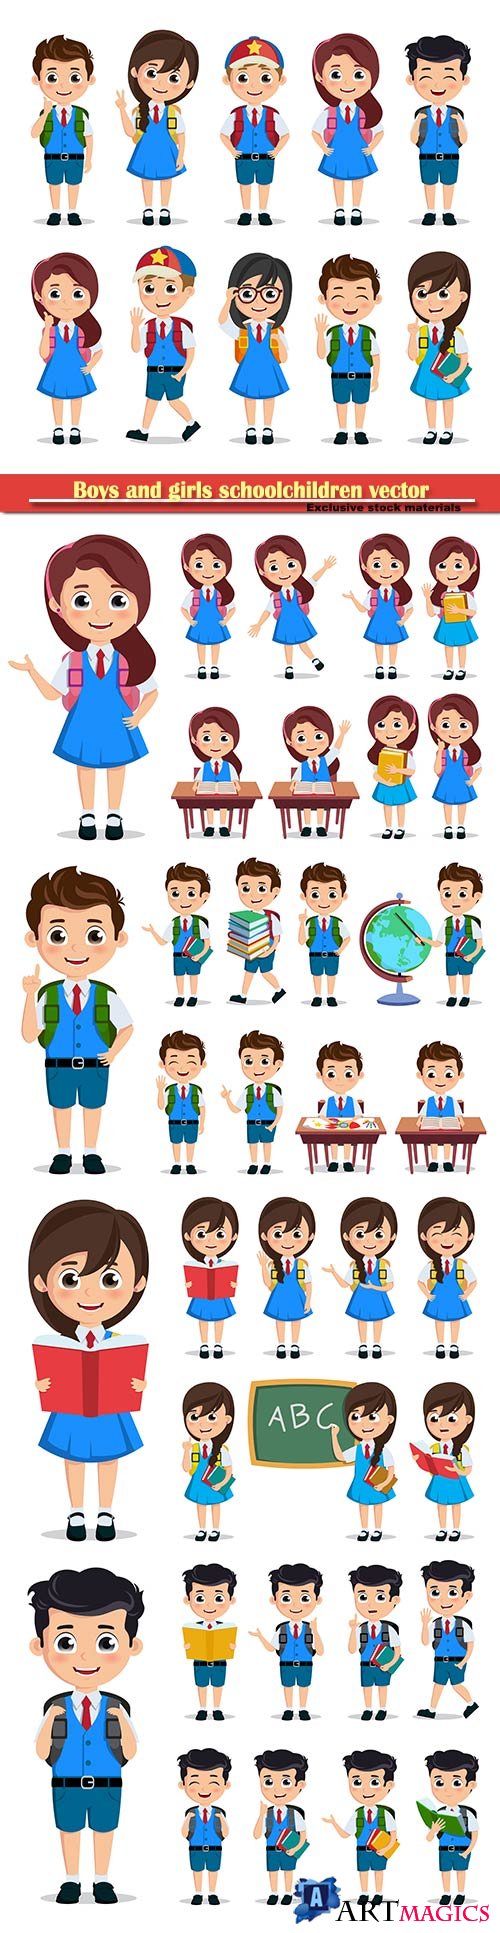 Boys and girls schoolchildren vector illustration